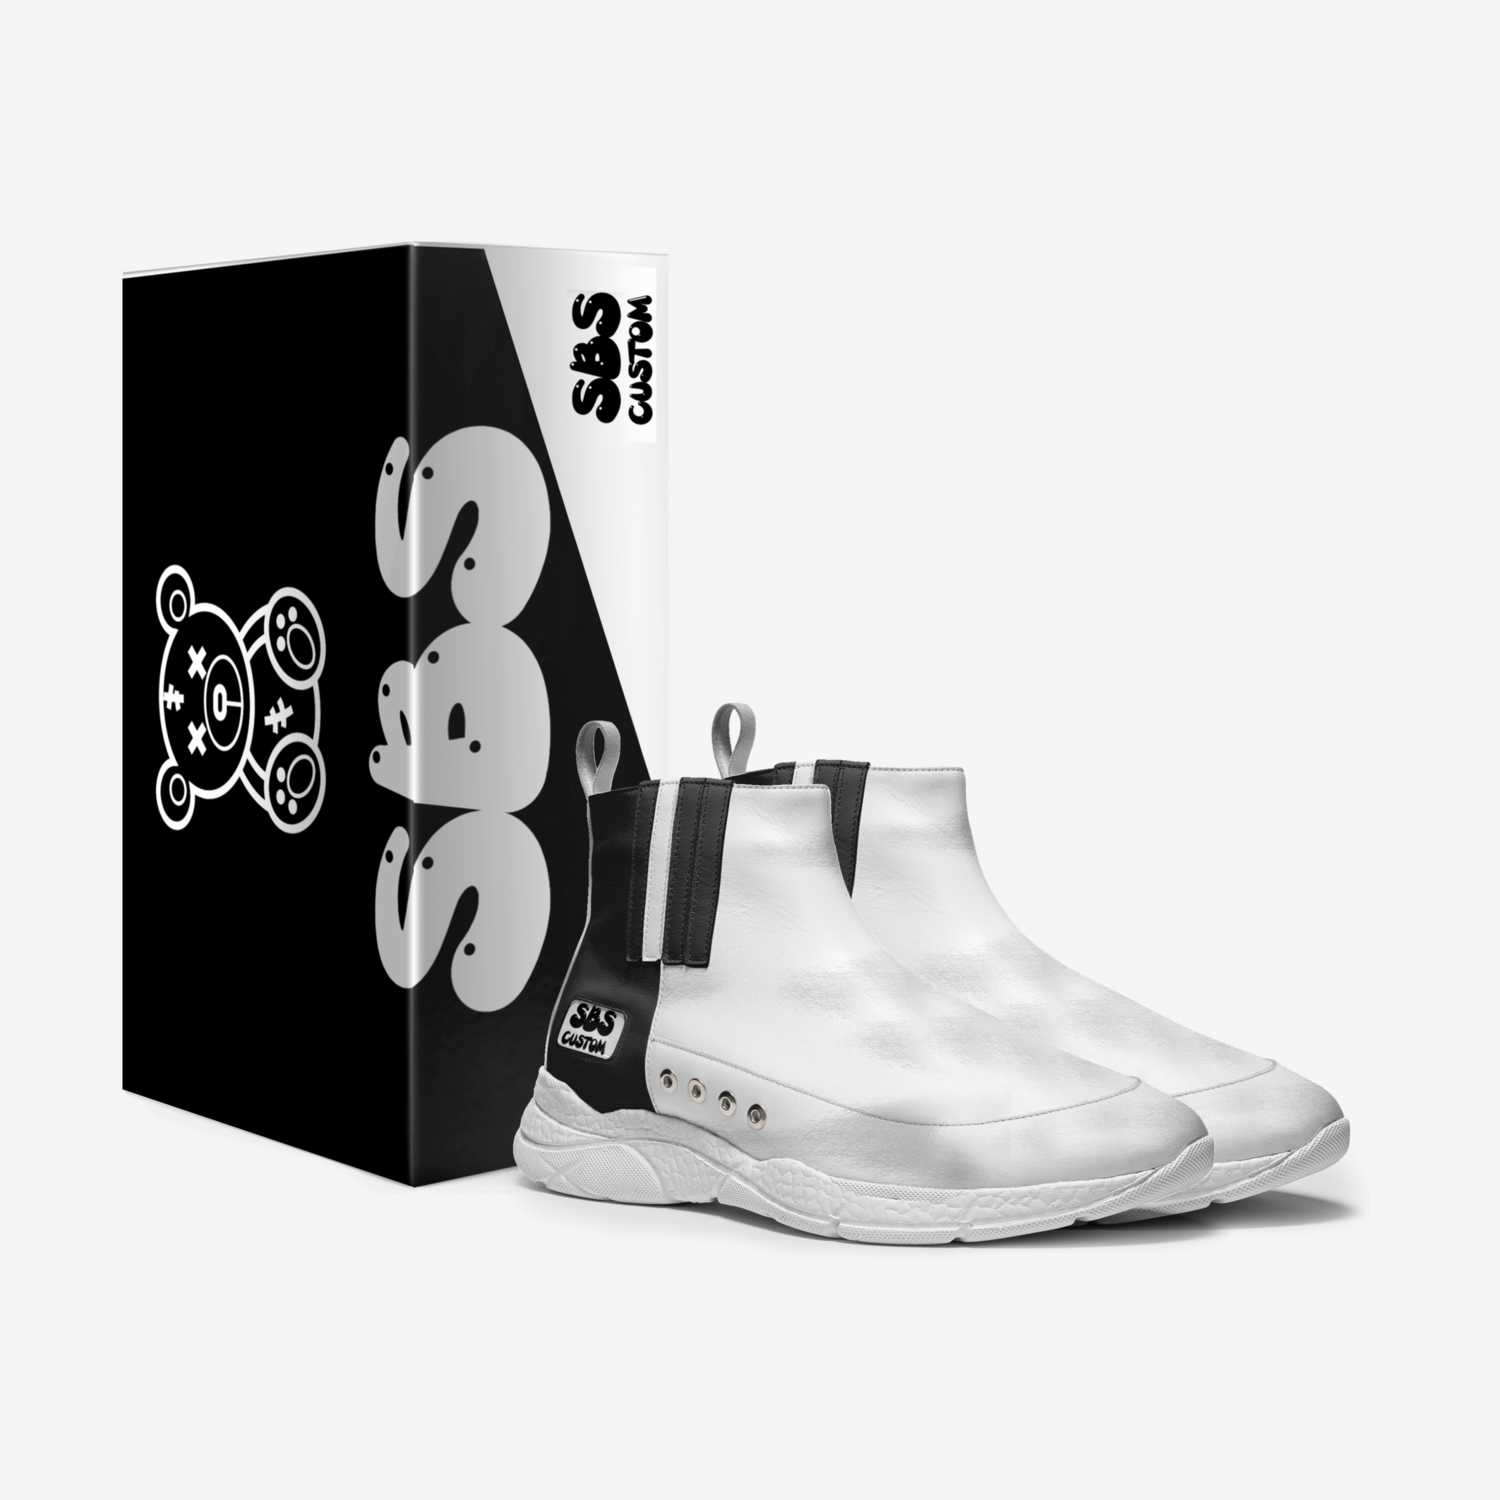 SBS Custom custom made in Italy shoes by Sacha Raeburn | Box view